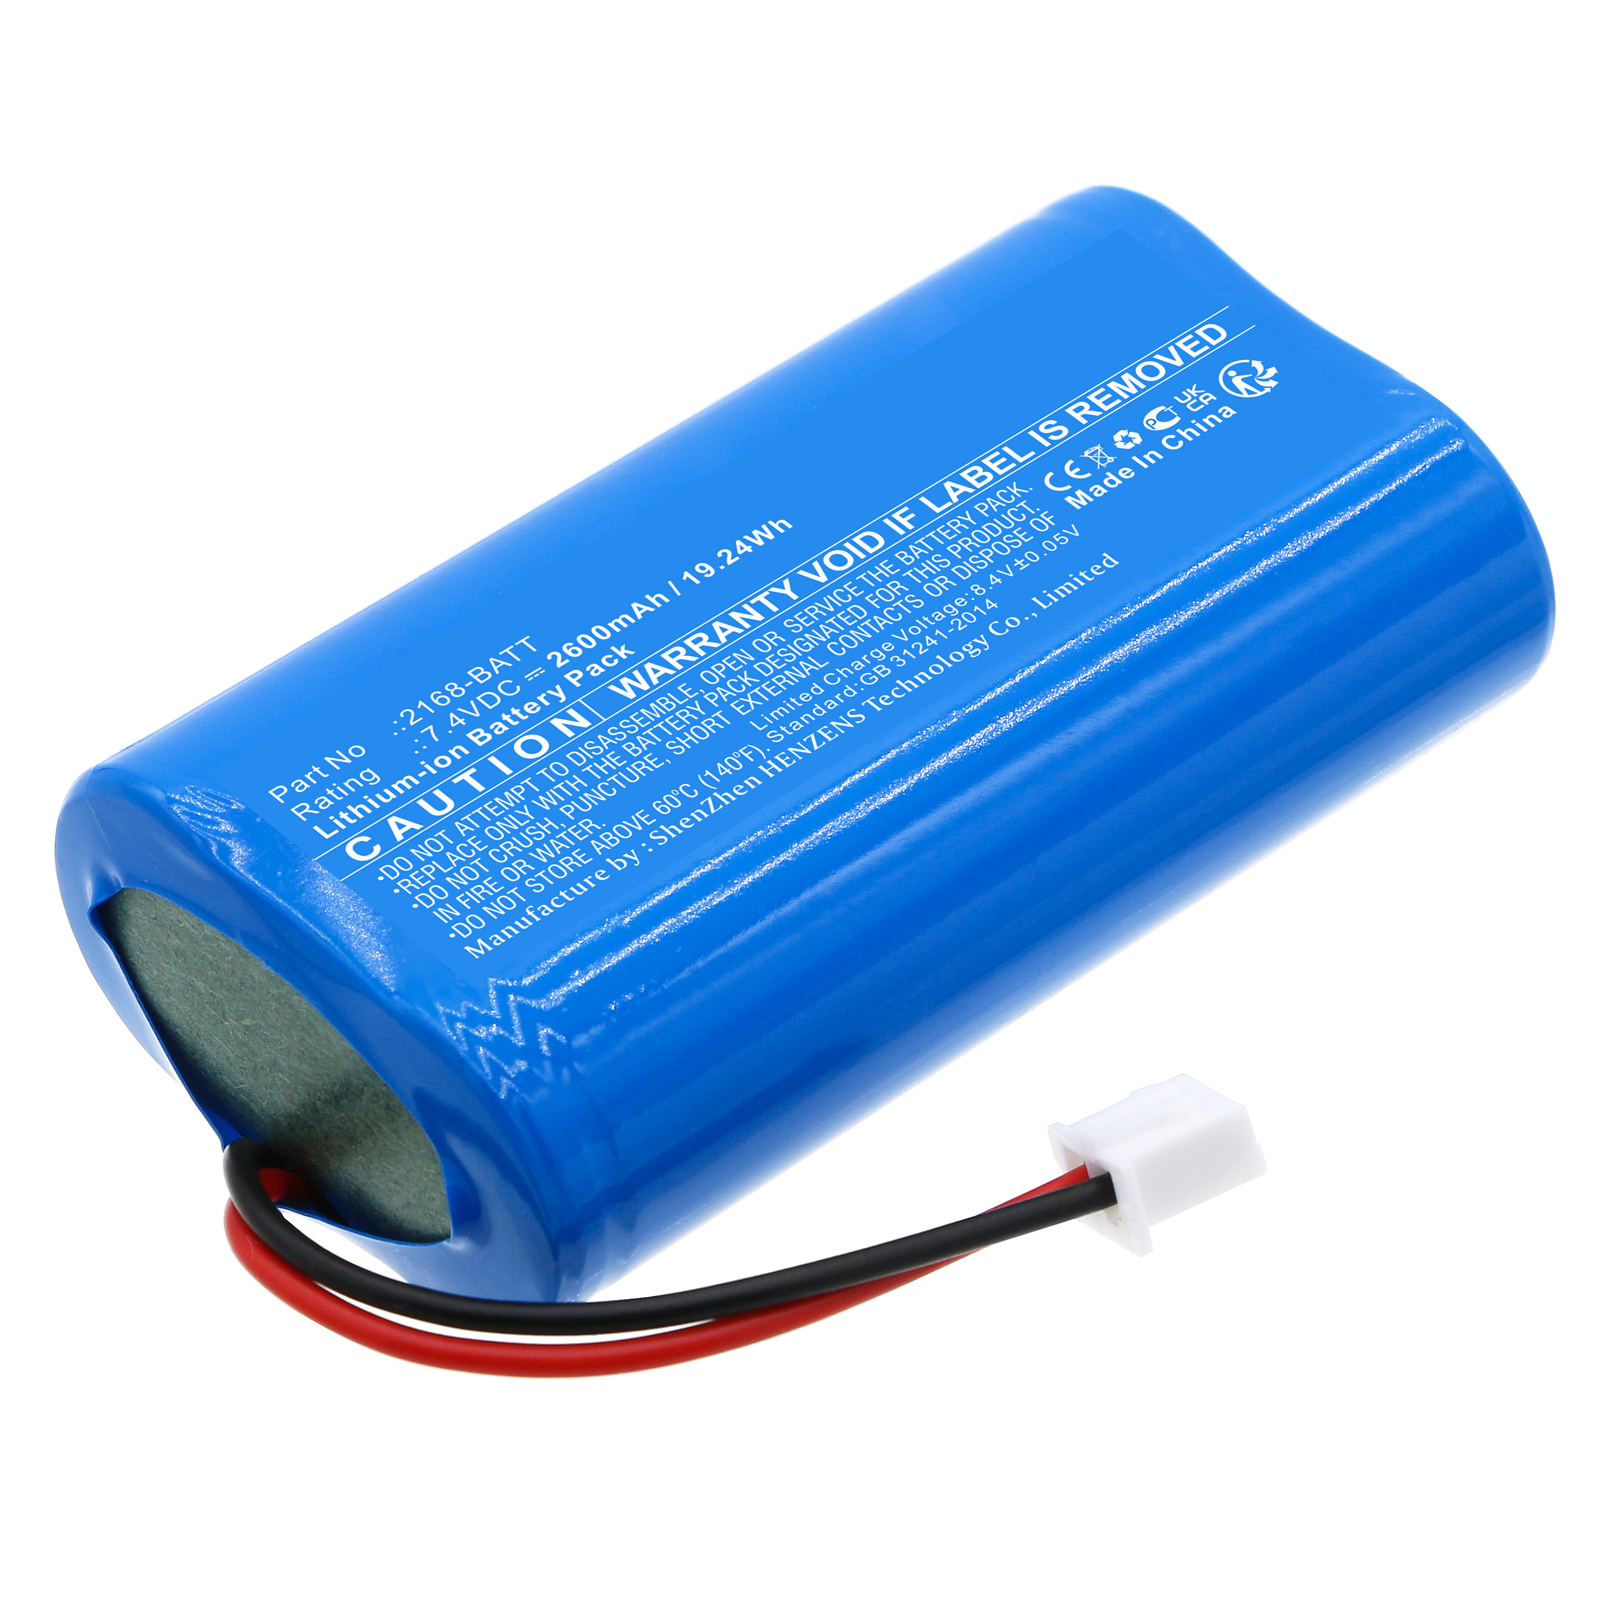 Synergy Digital Flashlight Battery, Compatible with Nightstick 2168-BATT Flashlight Battery (Li-ion, 7.4V, 2600mAh)